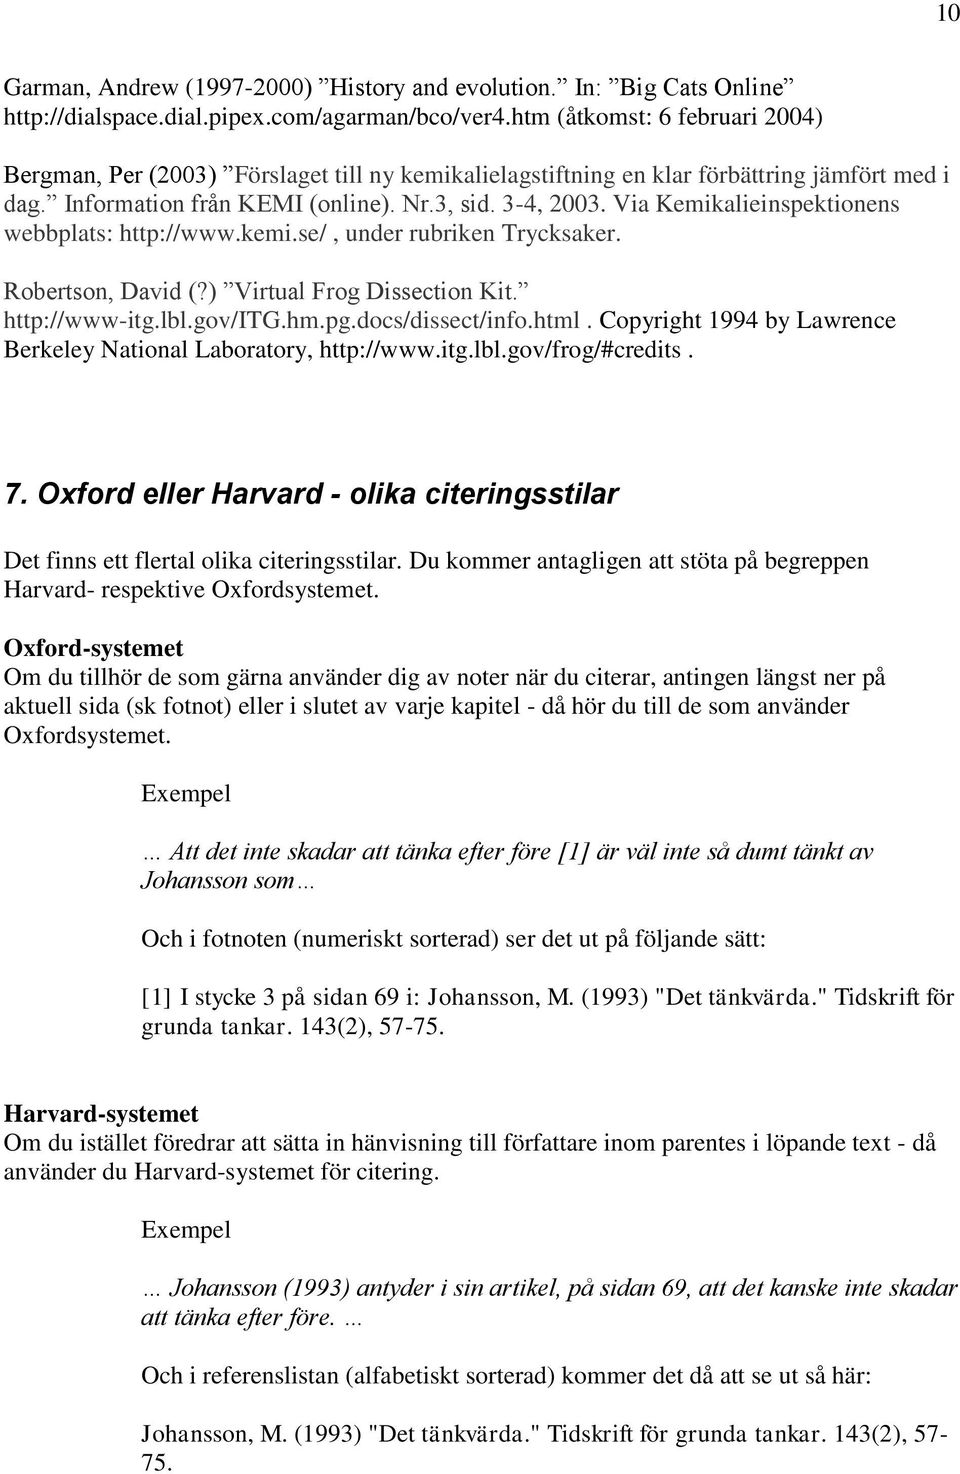 Via Kemikalieinspektionens webbplats: http://www.kemi.se/, under rubriken Trycksaker. Robertson, David (?) Virtual Frog Dissection Kit. http://www-itg.lbl.gov/itg.hm.pg.docs/dissect/info.html.